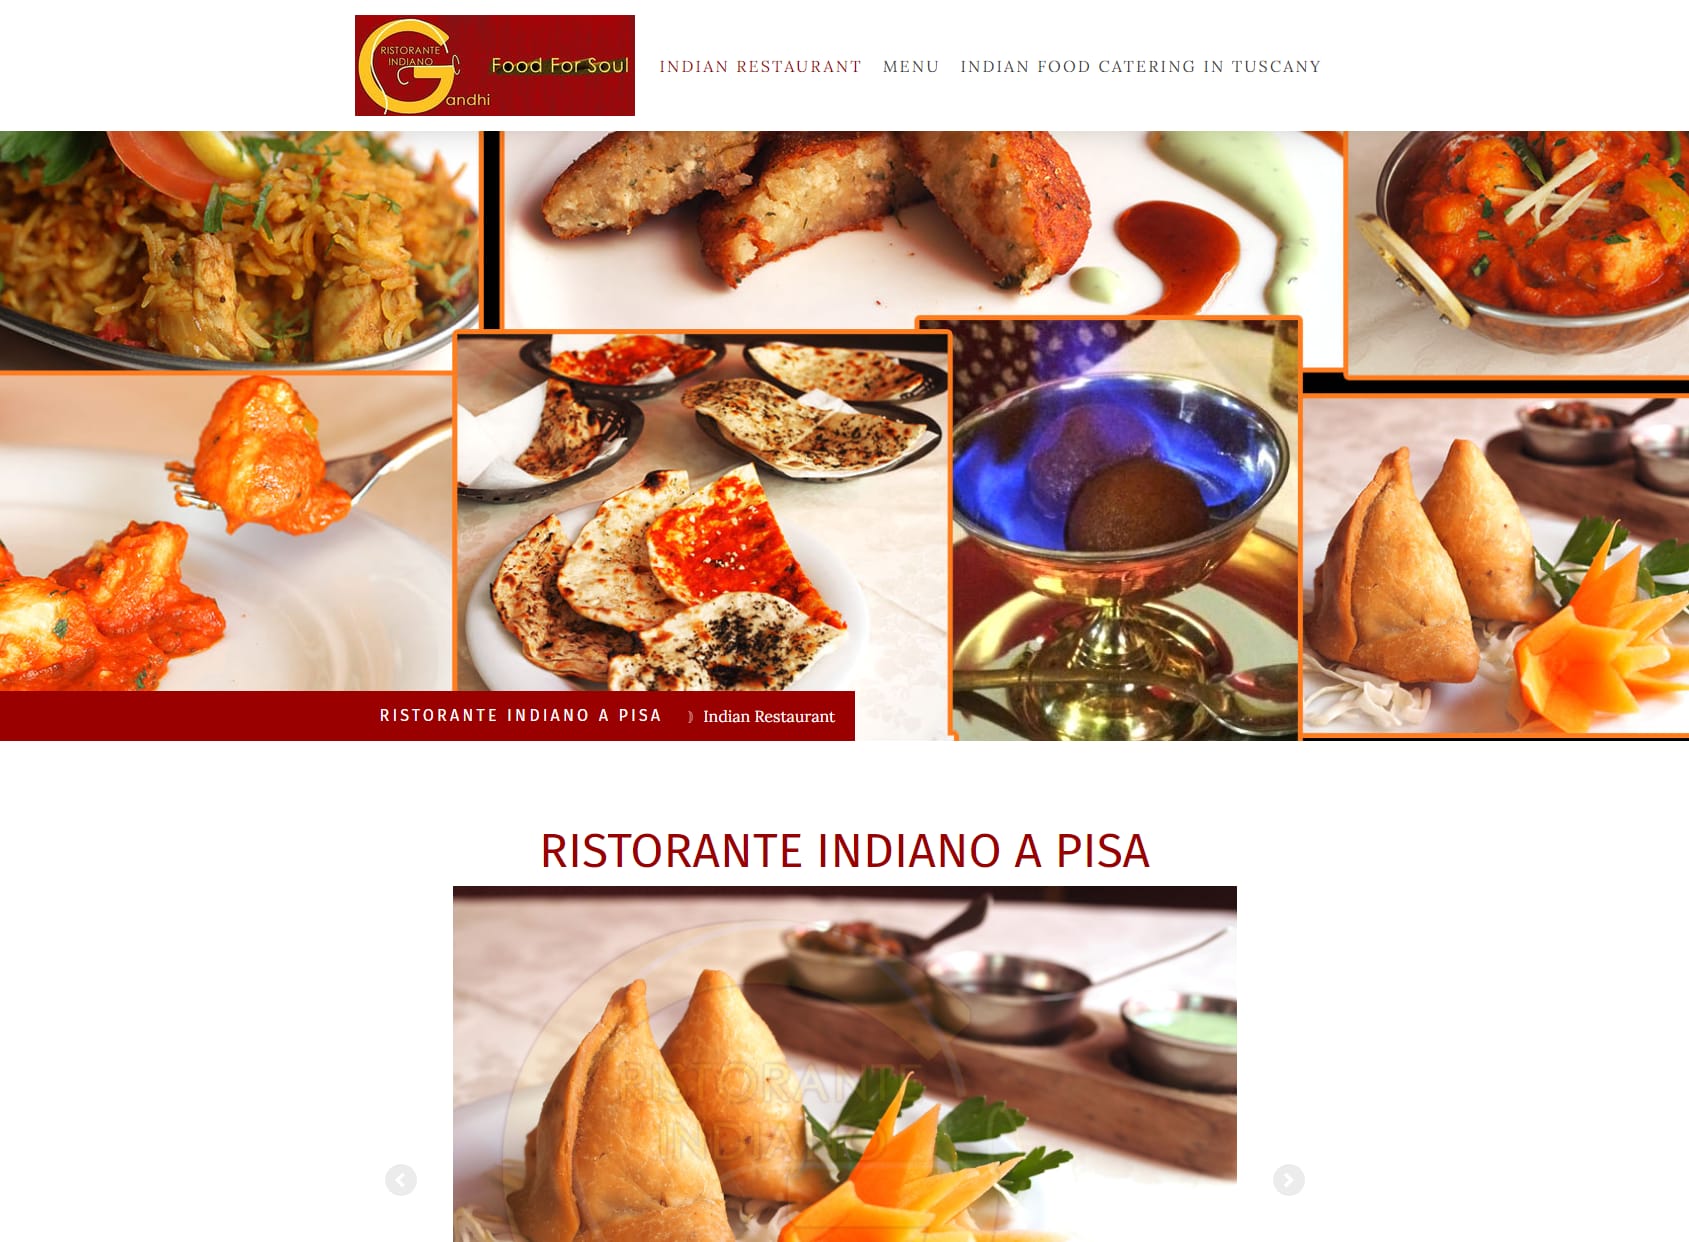 Gandhi Indian Restaurant Pisa